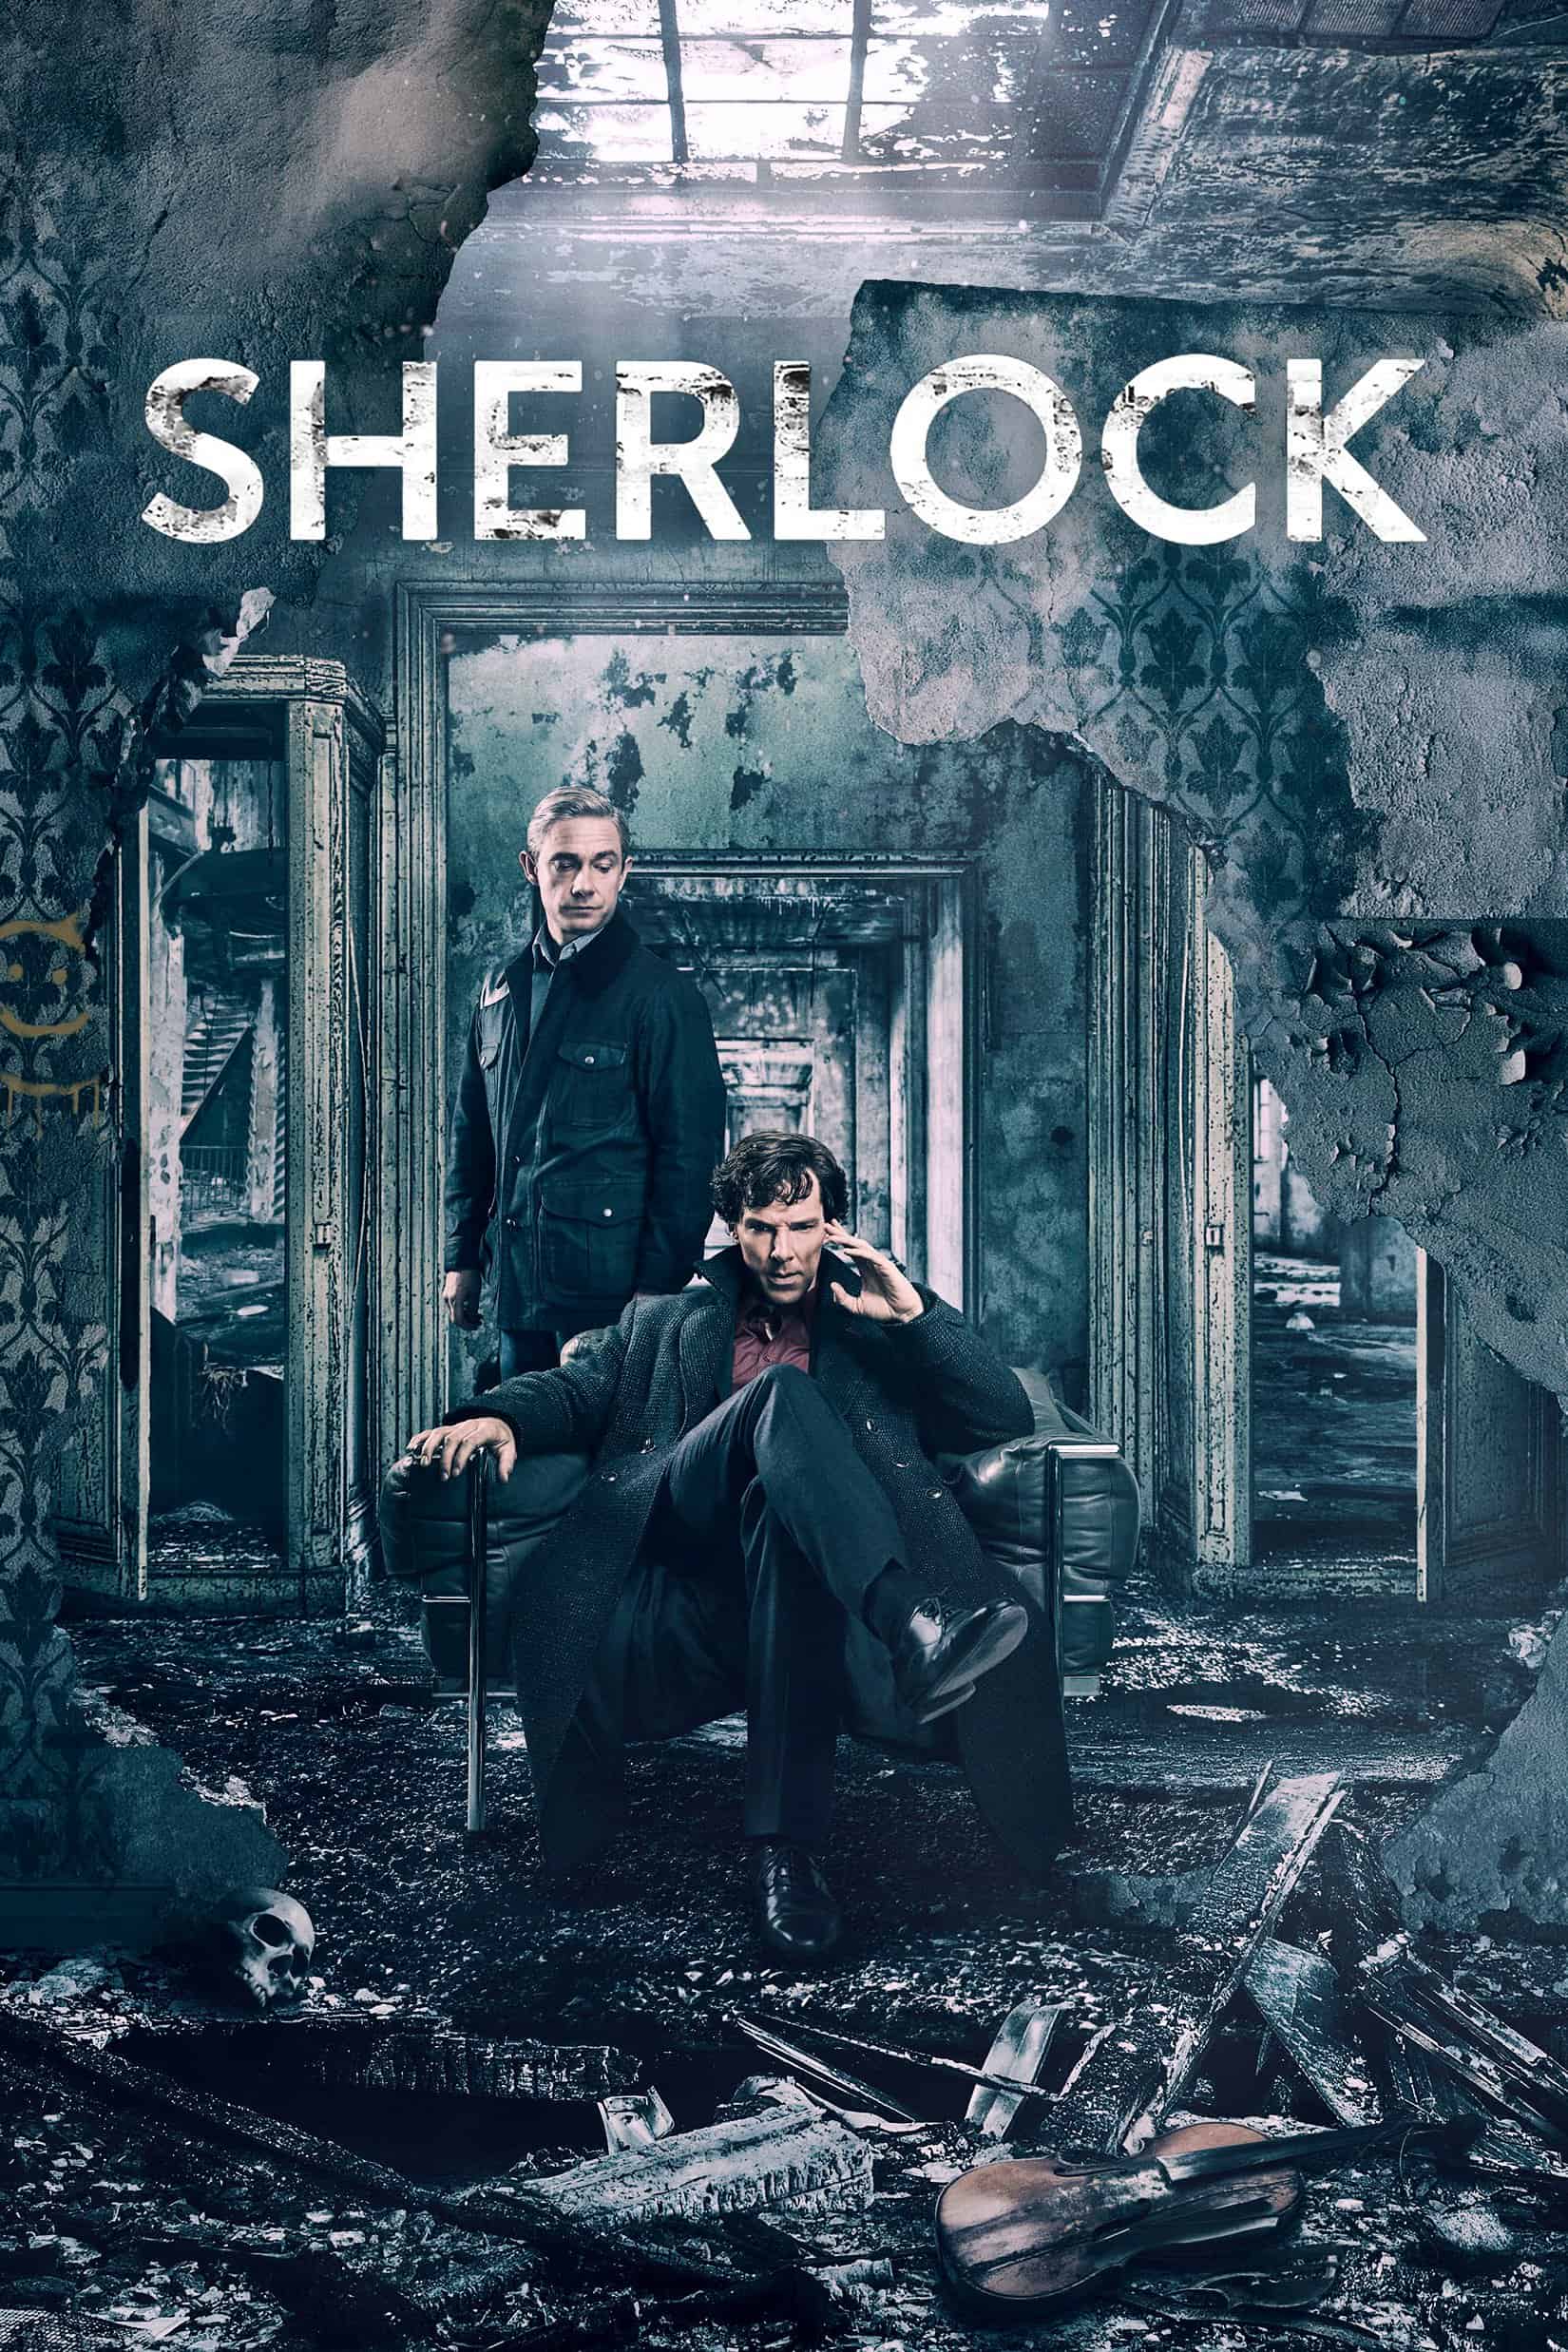 Sherlock, 2010 